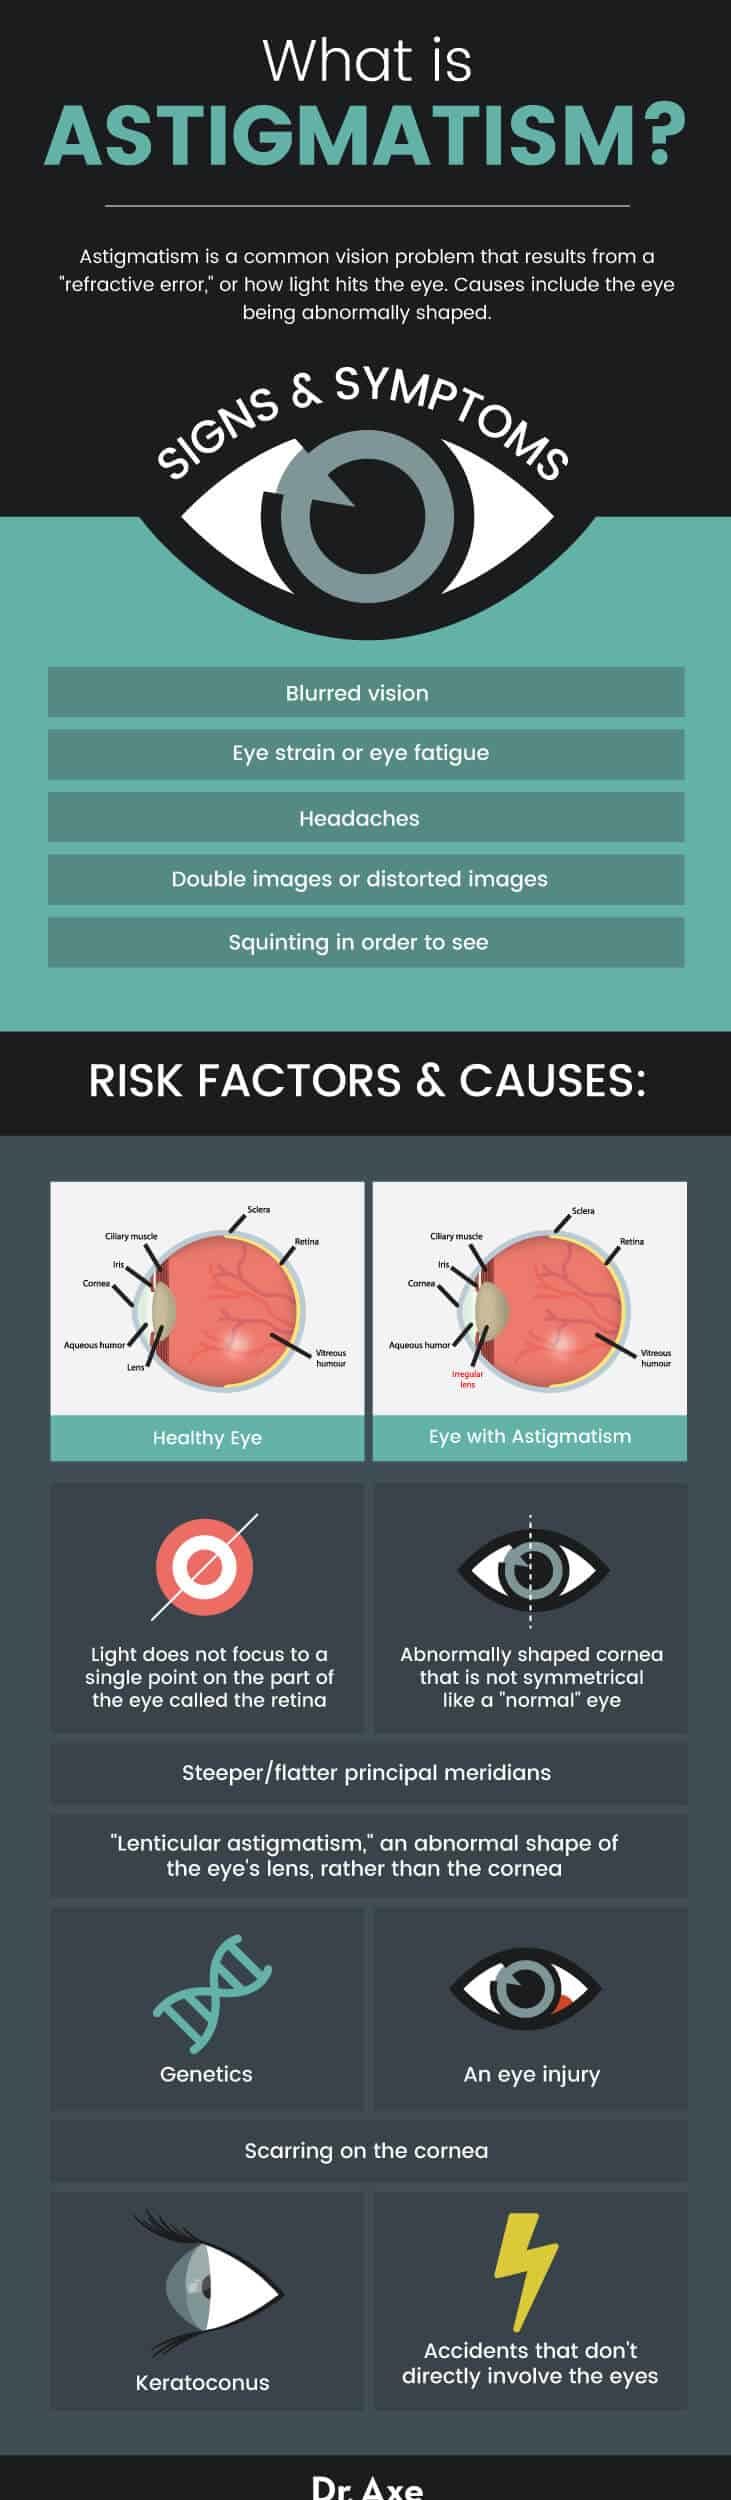 astigmatism symptoms, risk factors & causes